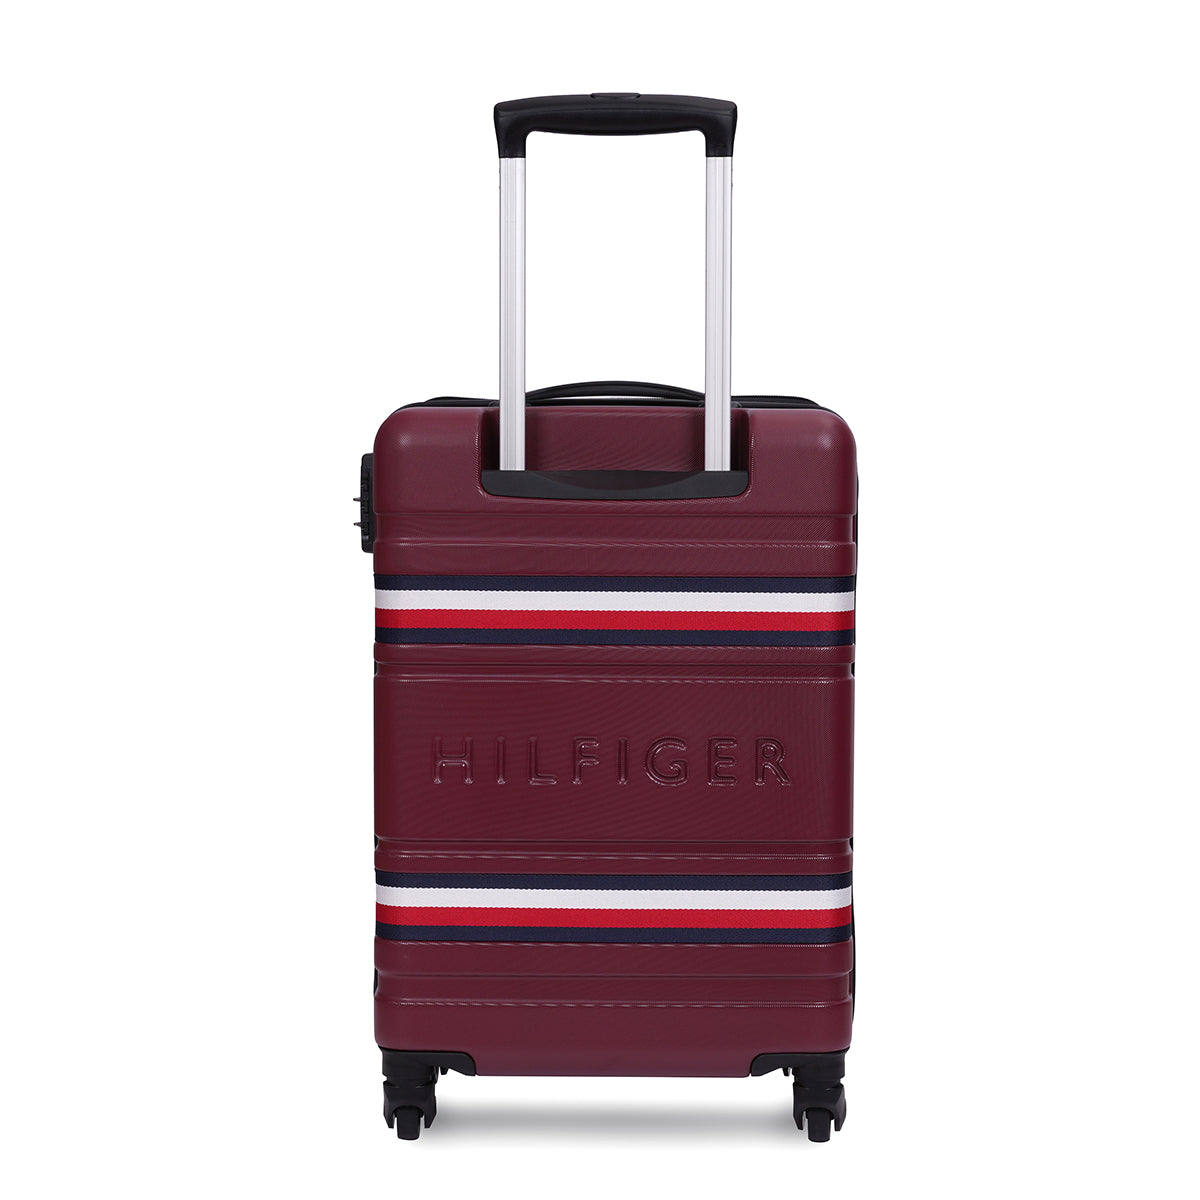 The Vertical Thames Pro Unisex Hard Luggage wine